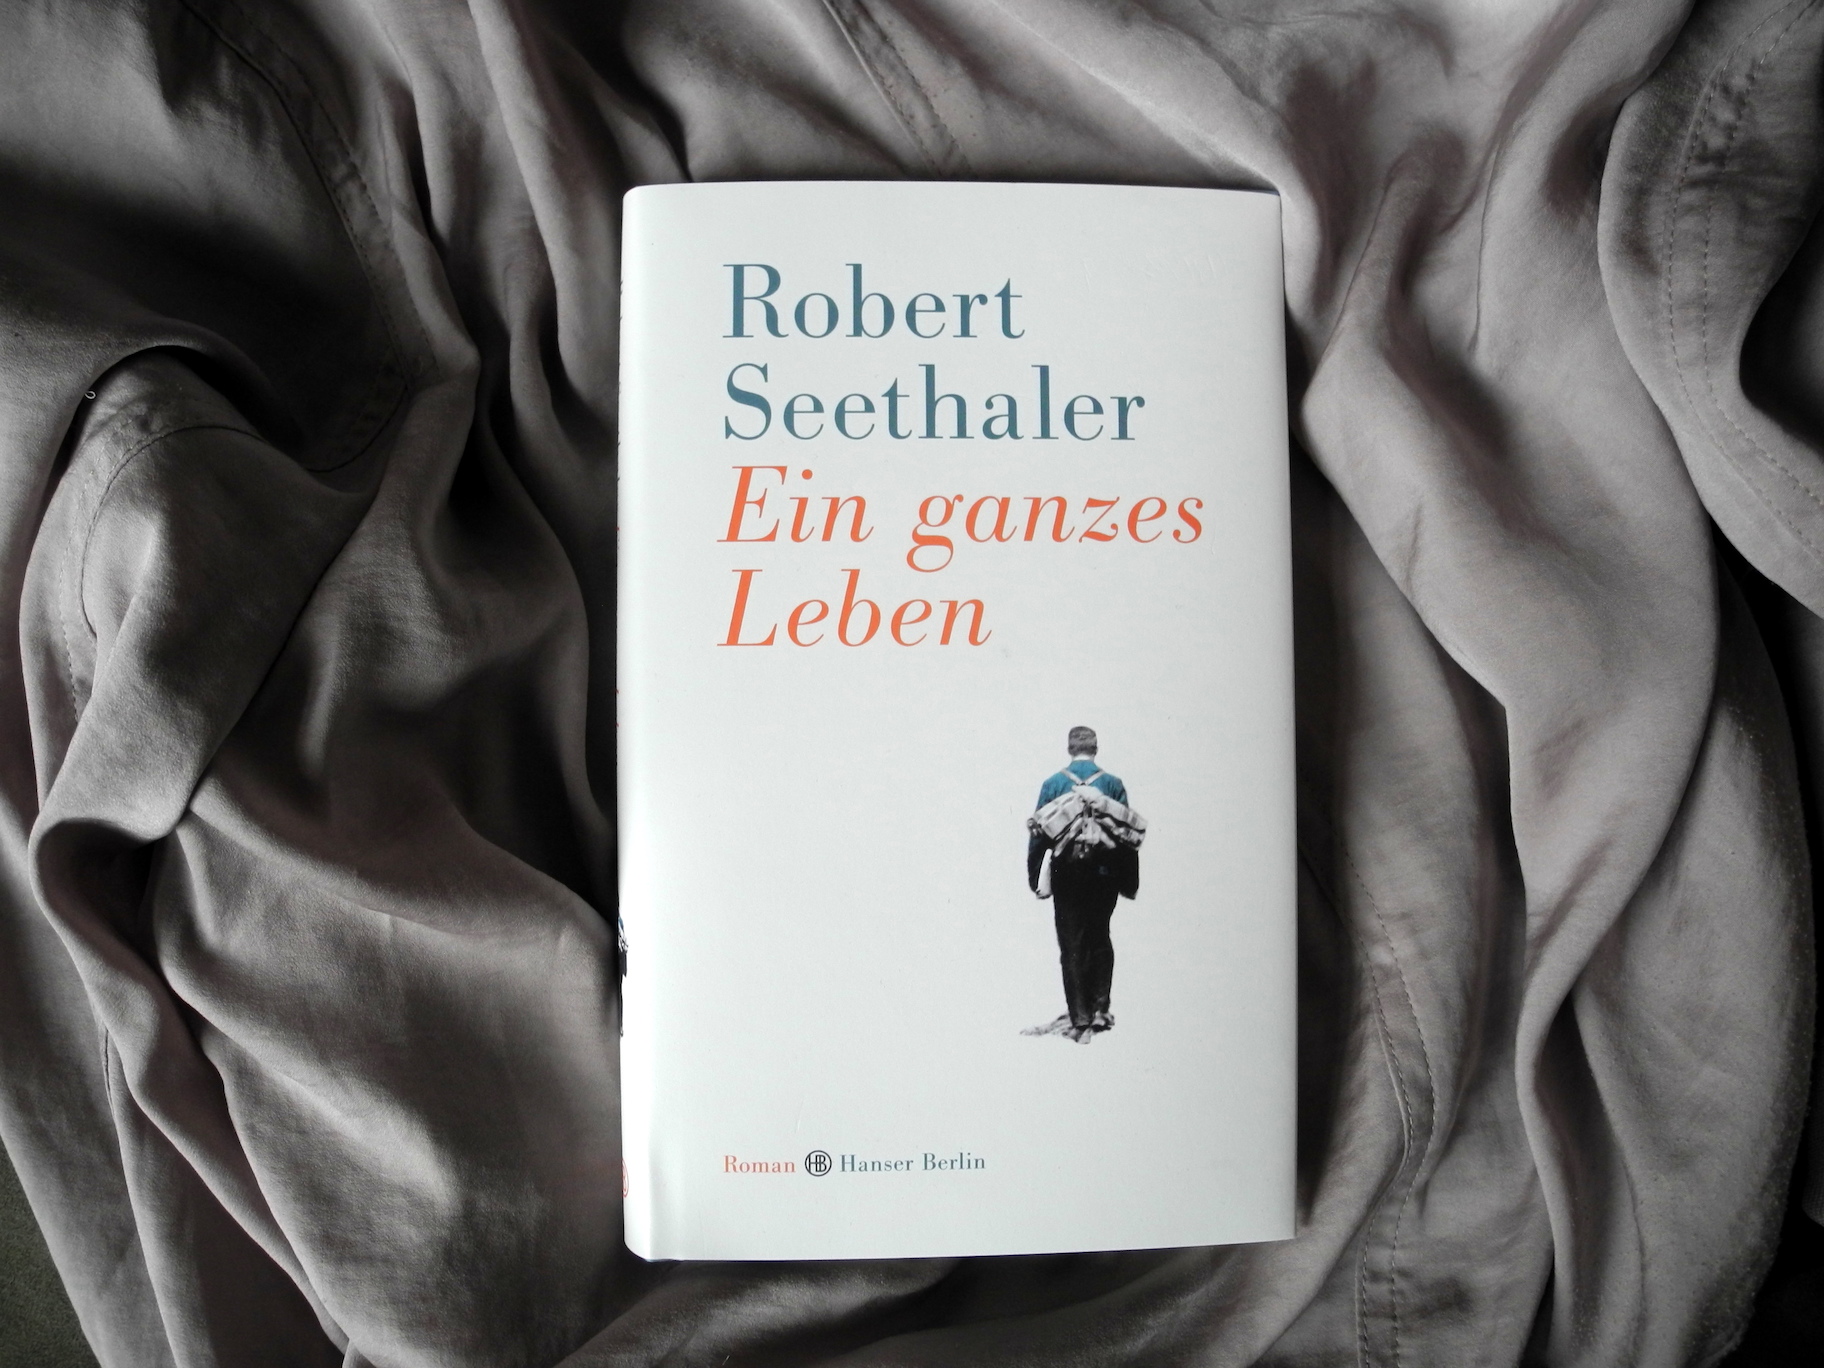 Robert Seethaler: Ein ganzes Leben